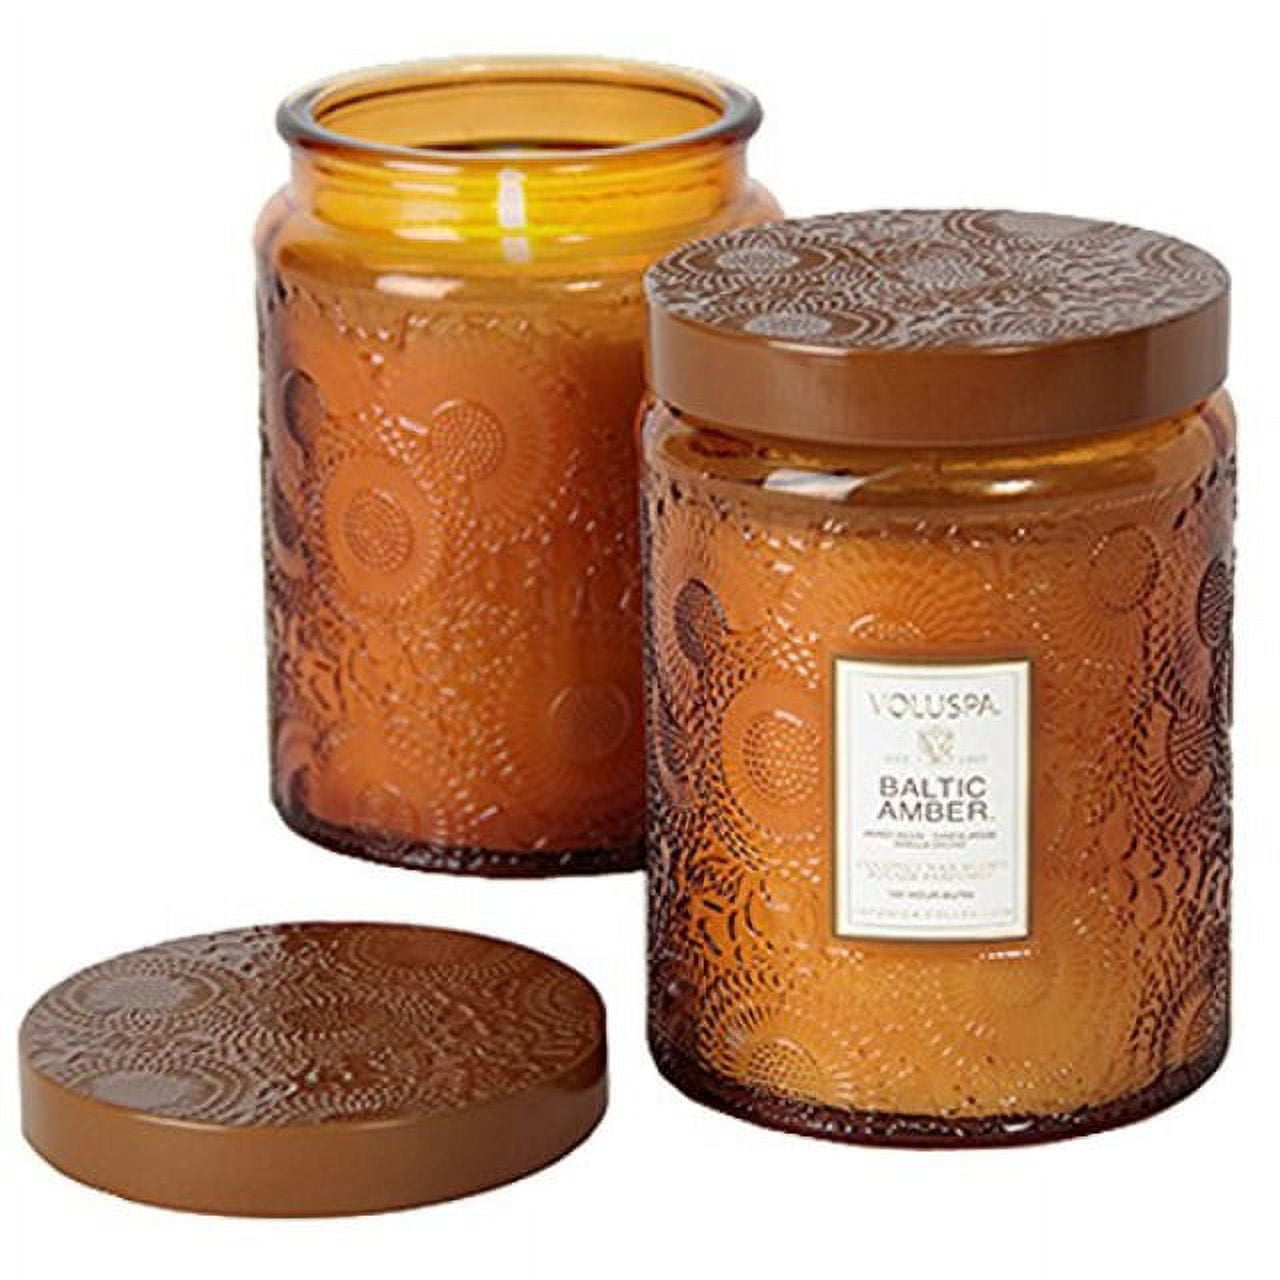 Voluspa - Baltic Amber Large Glass Jar Candle